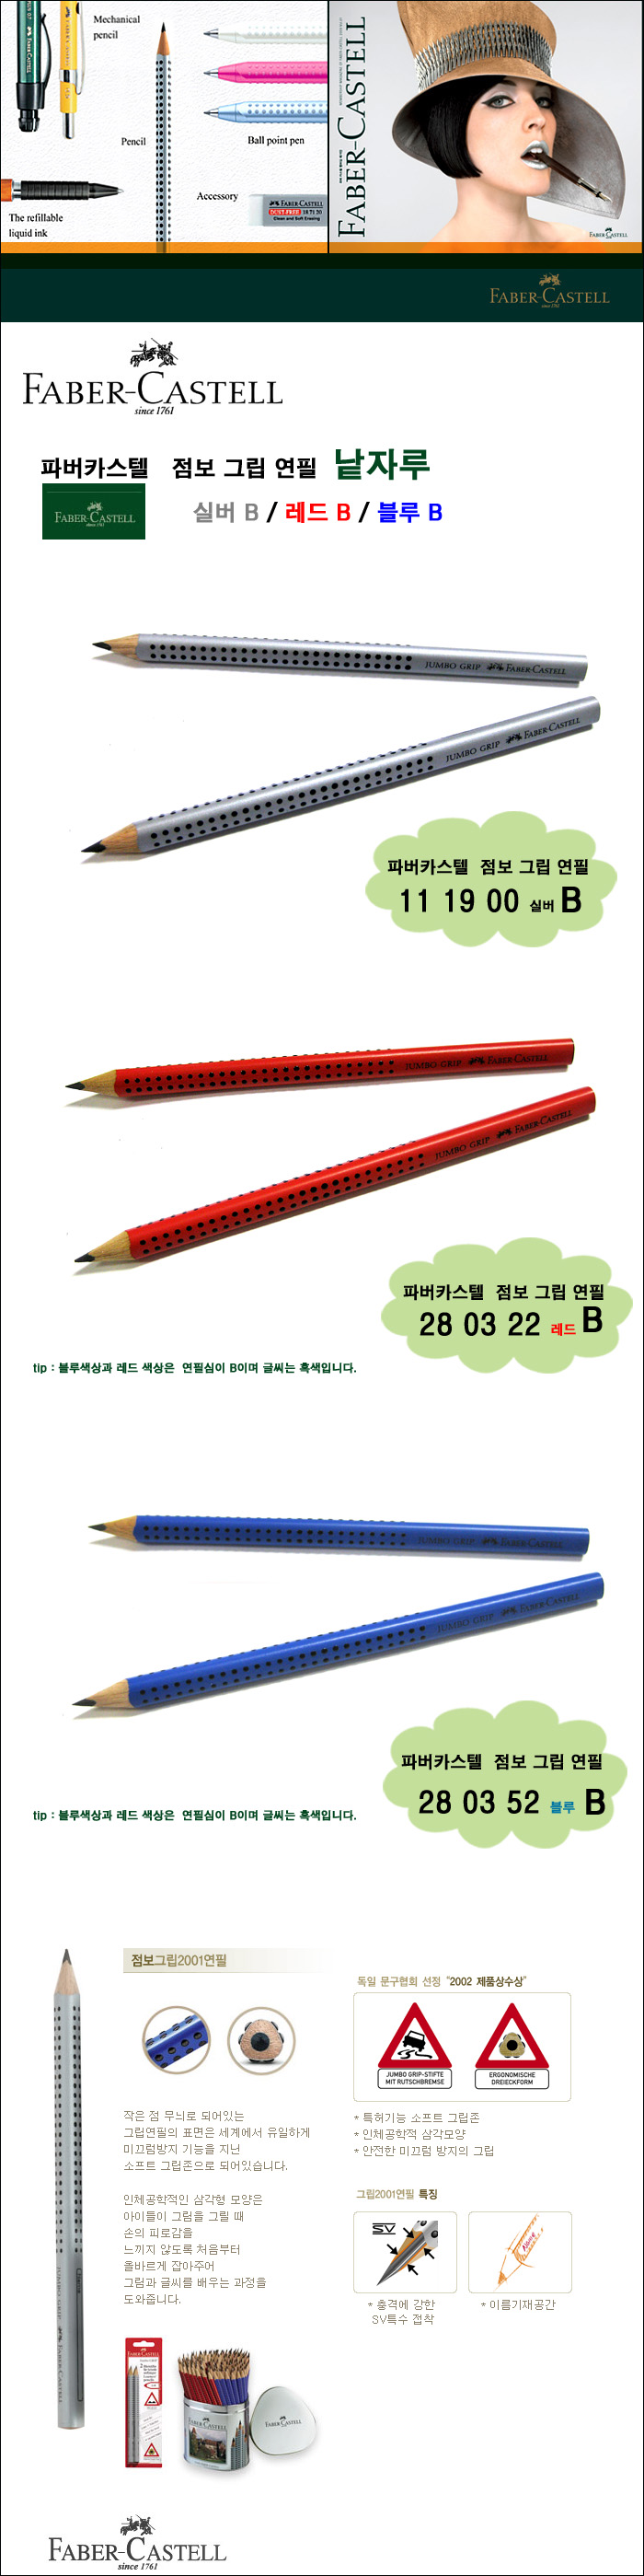 Faber-Castell Jumbo Grip Pencil / 1 / B / Jumbo Triangle Pencil 119000/280322/280352 / triangular pencils